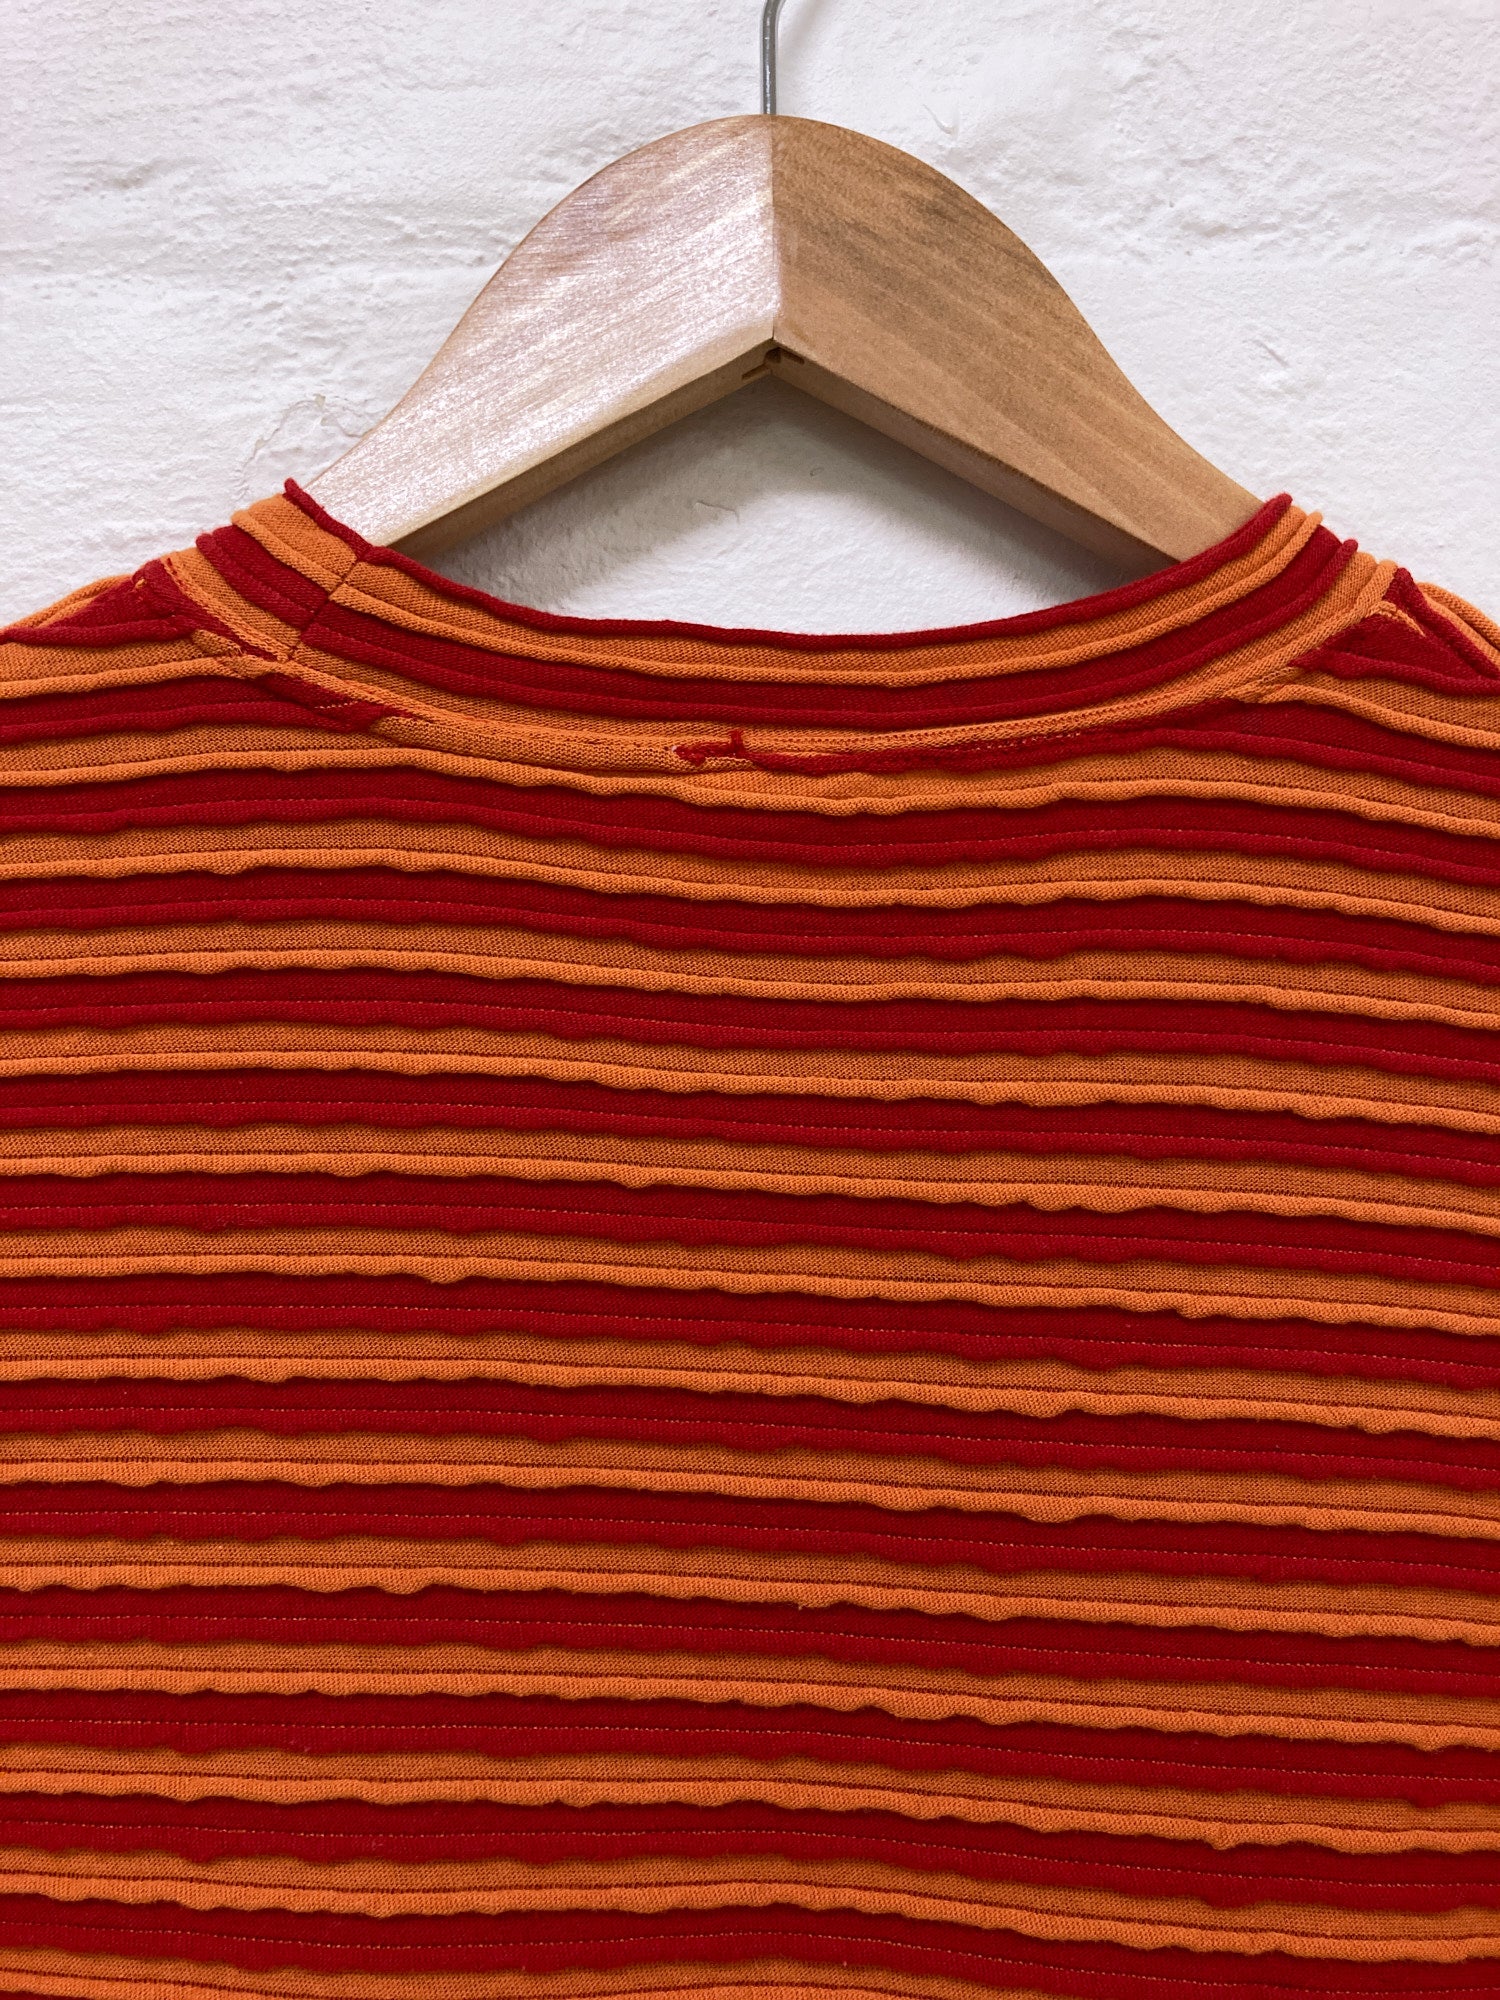 Dezert 1990s red orange striped cotton jersey long sleeve top - size M